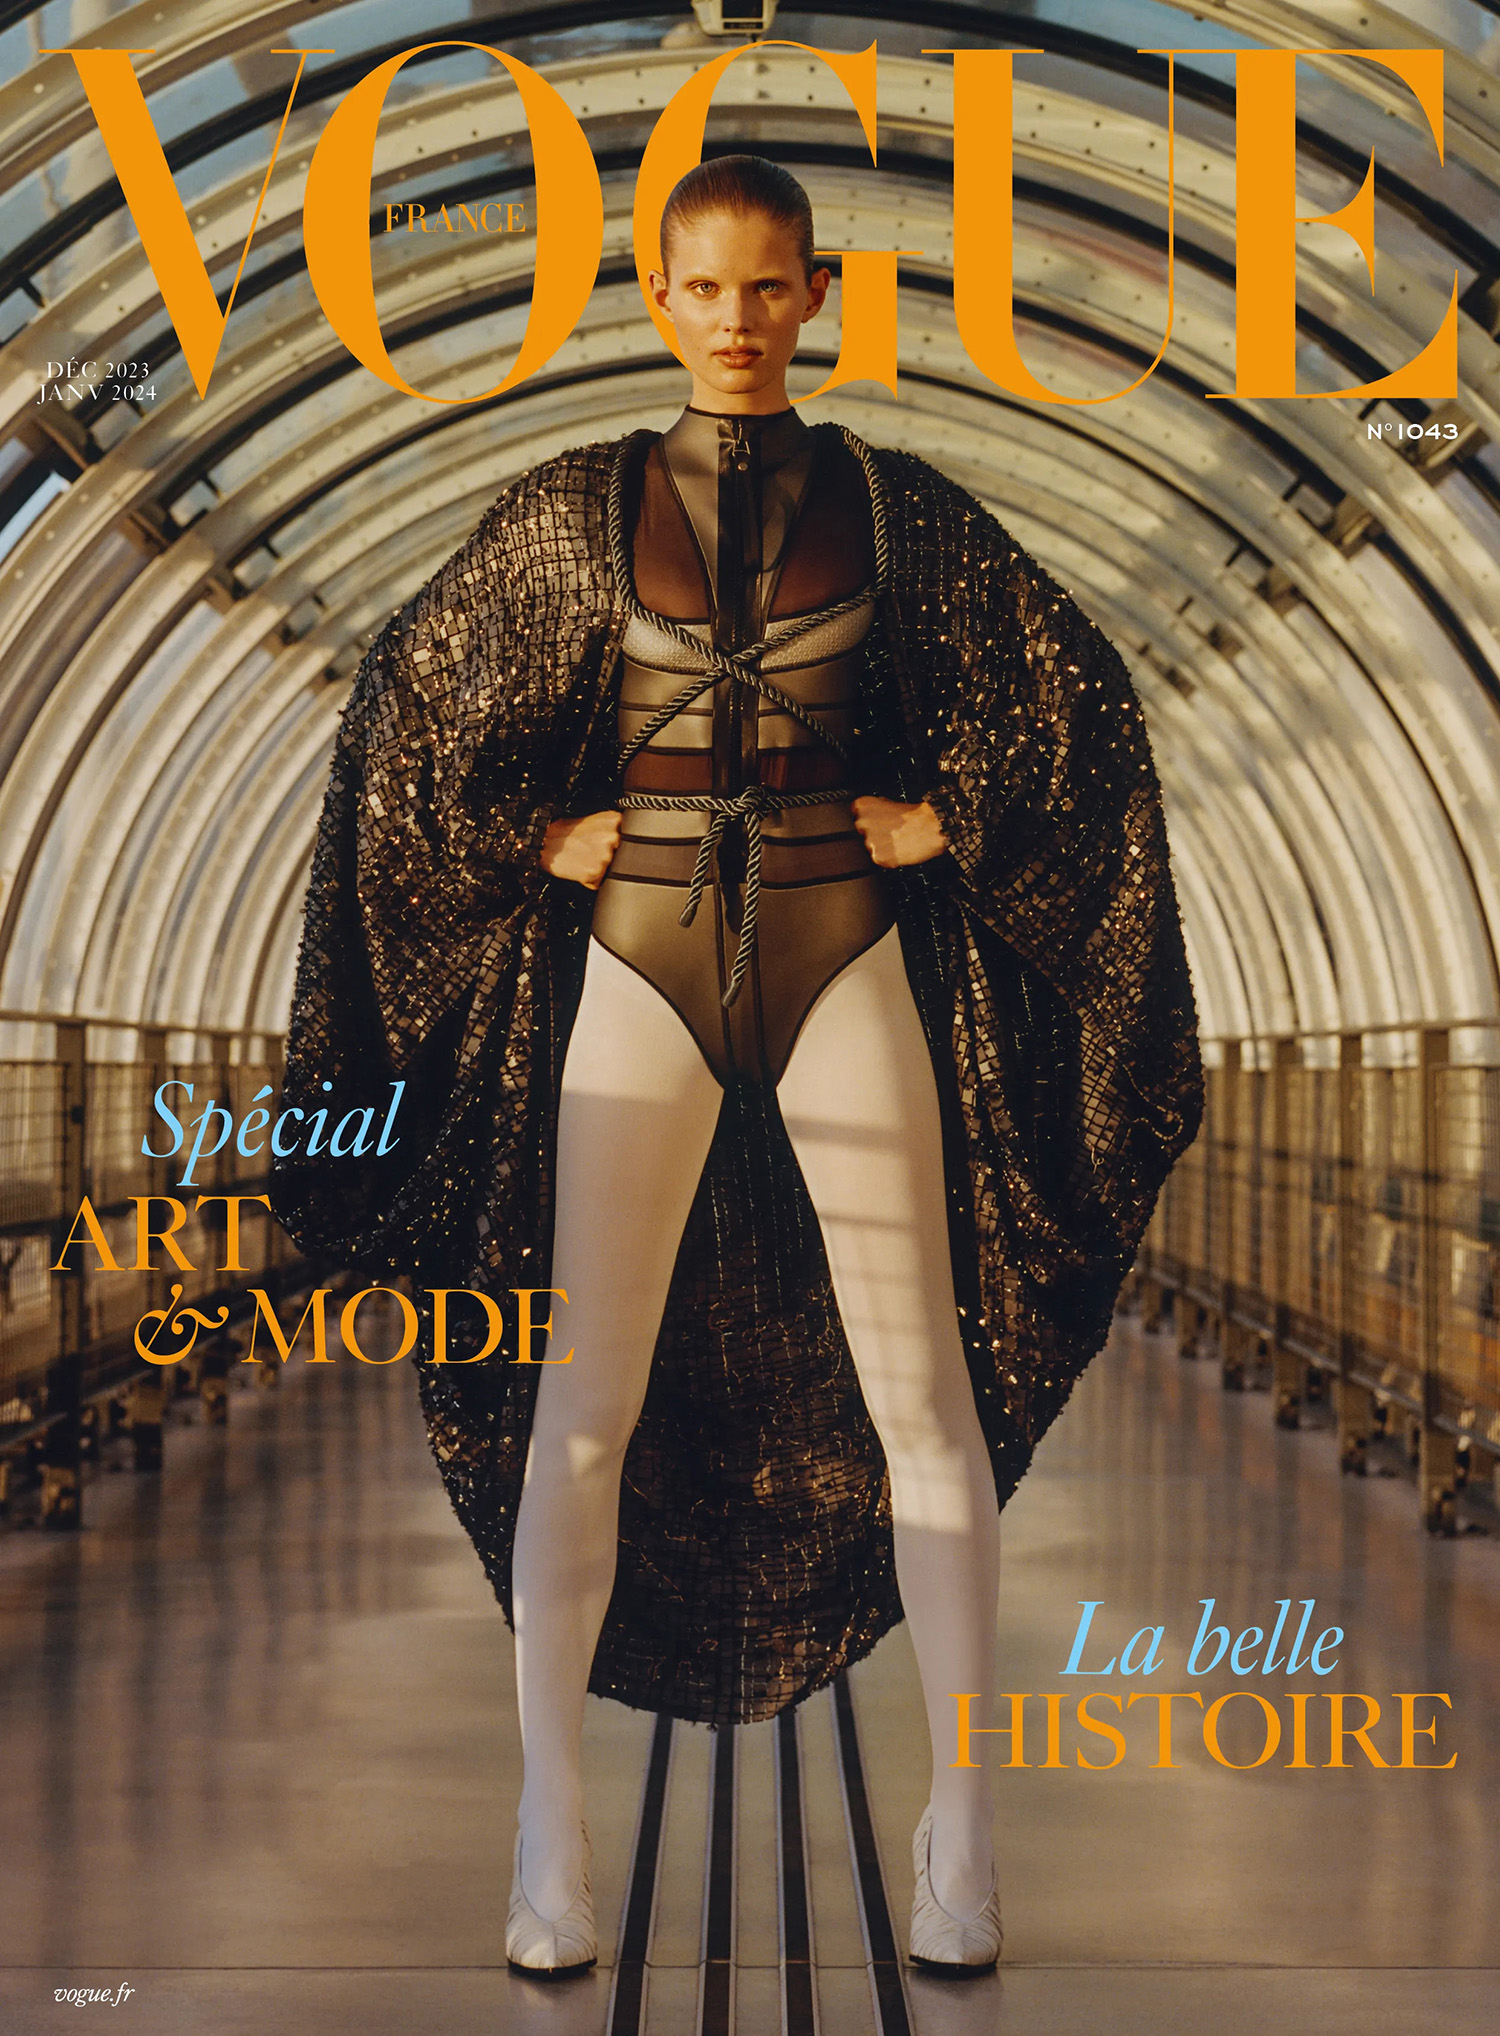 Ida Heiner covers Vogue France December 2023-January 2024 by Théo de Gueltzl